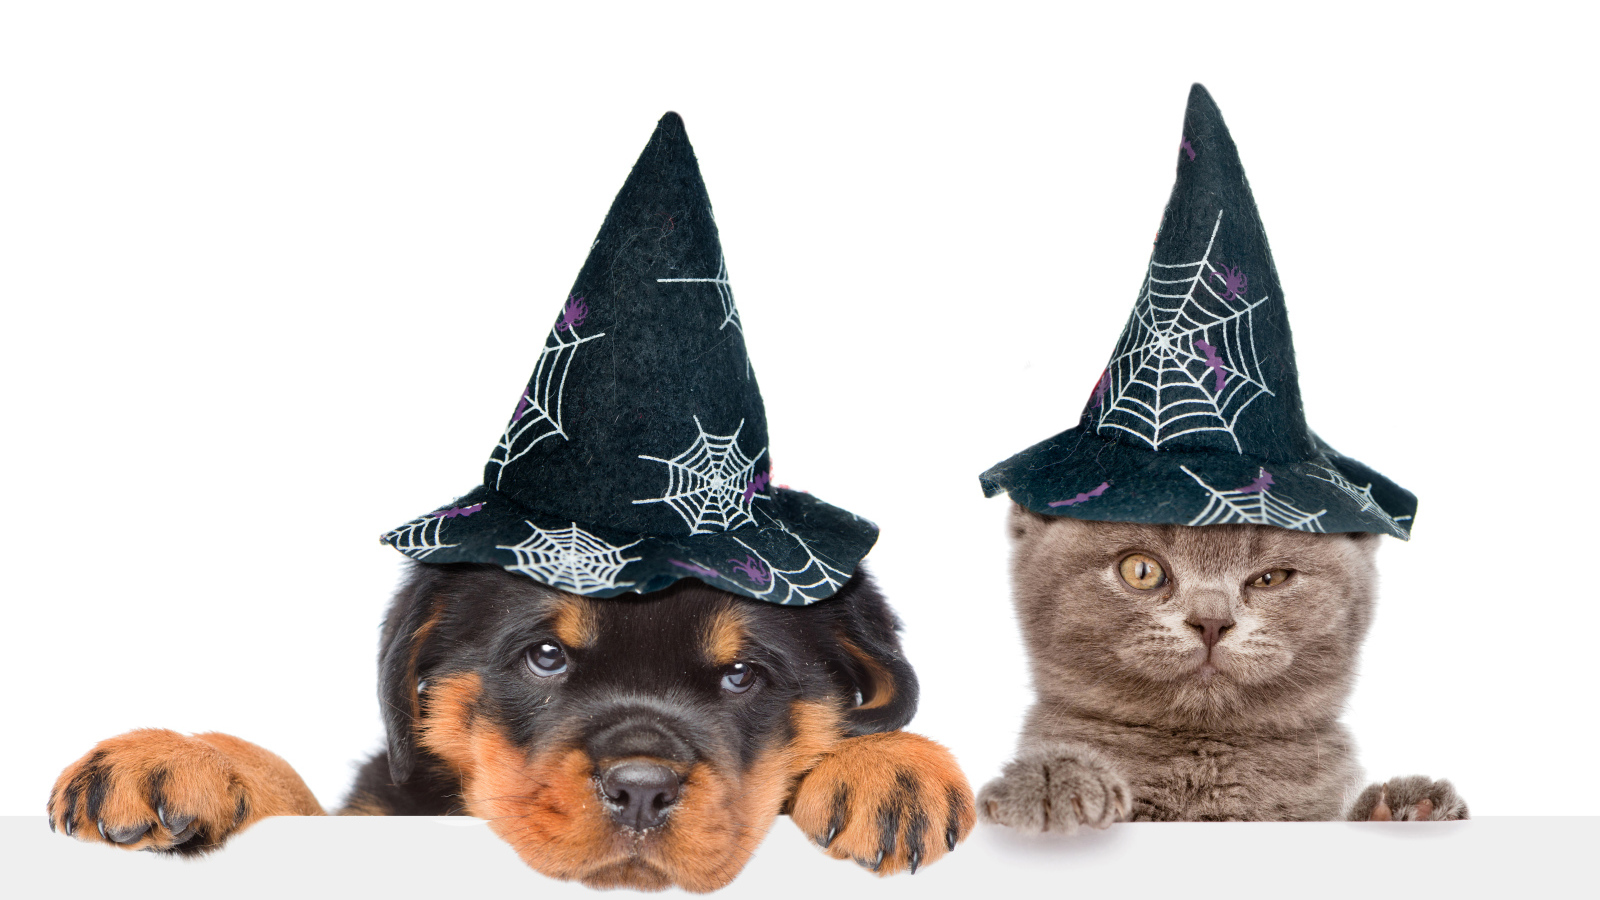 Щенок и котенок в колпаках на Хэллоуин 